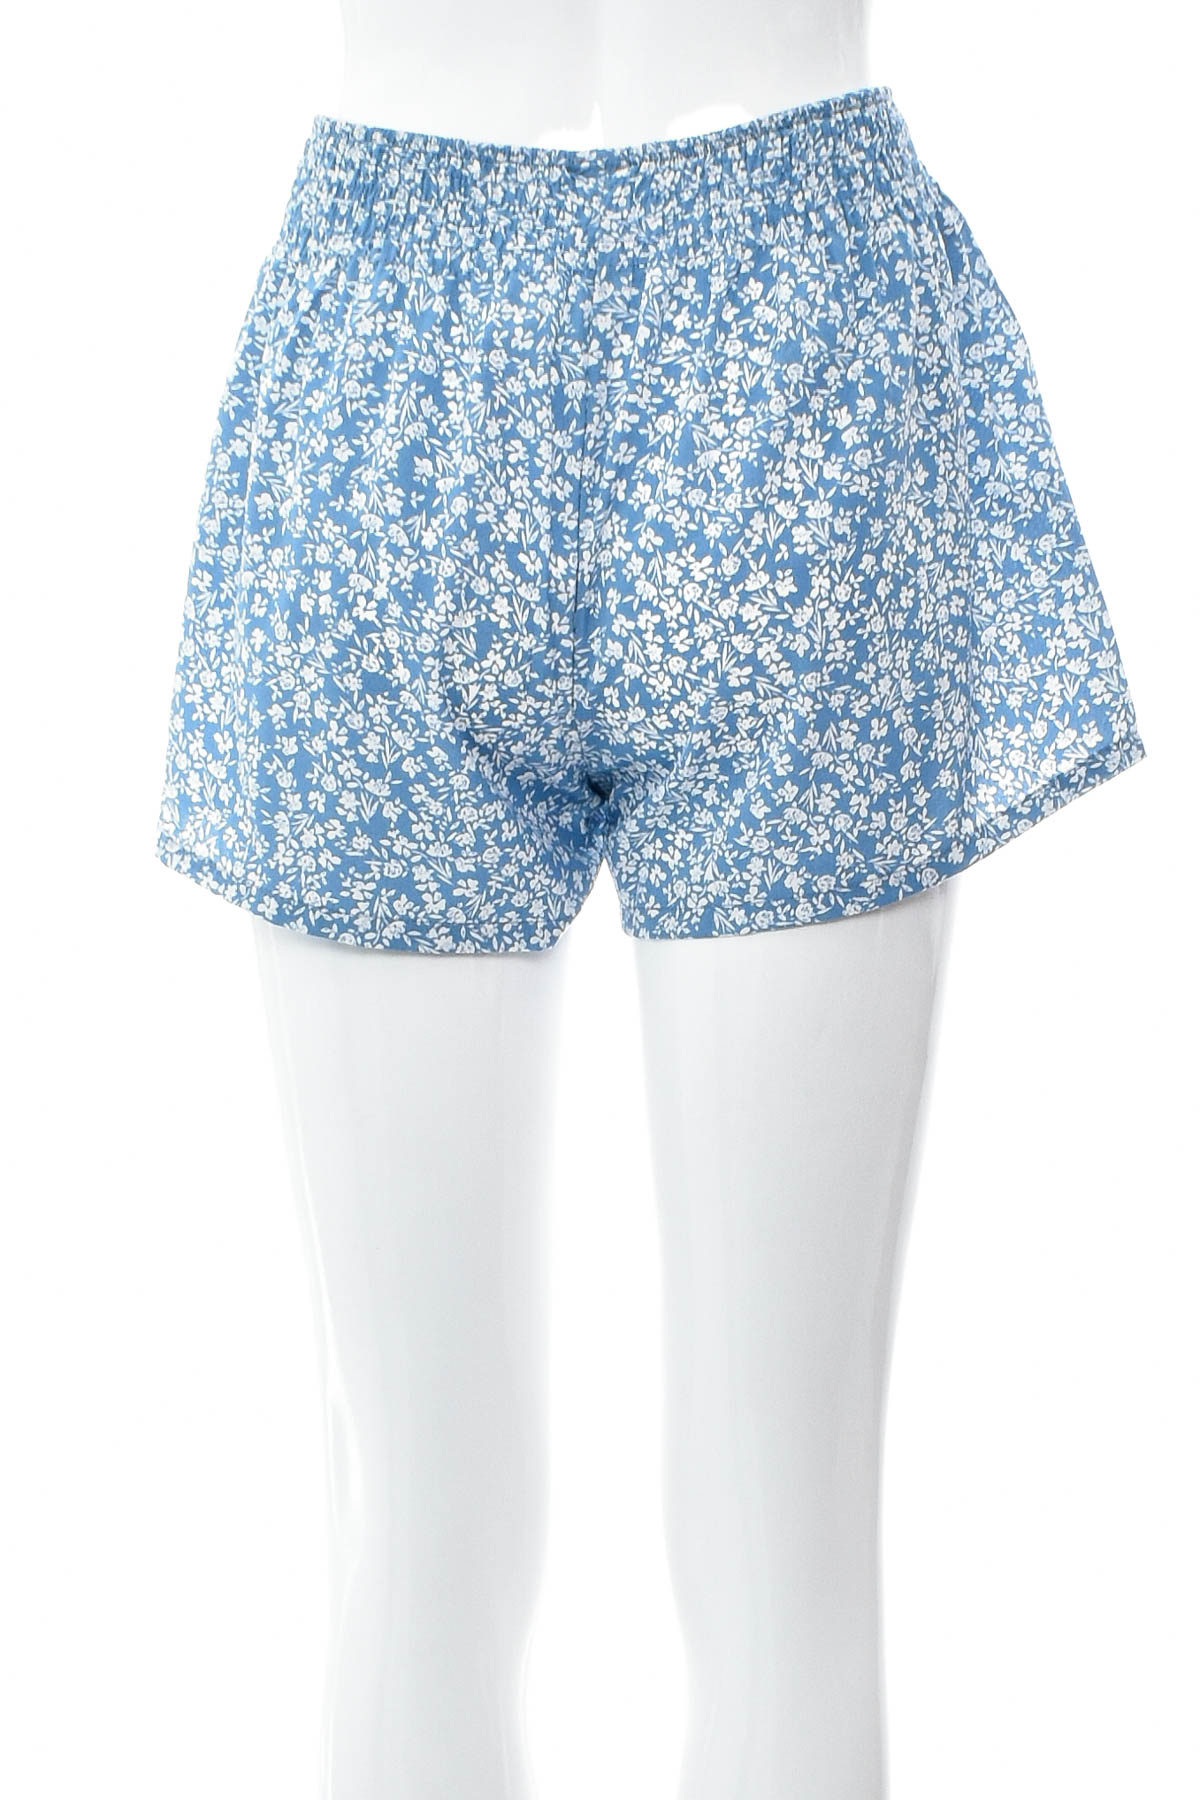 Shorts for girls - SHEIN - 1